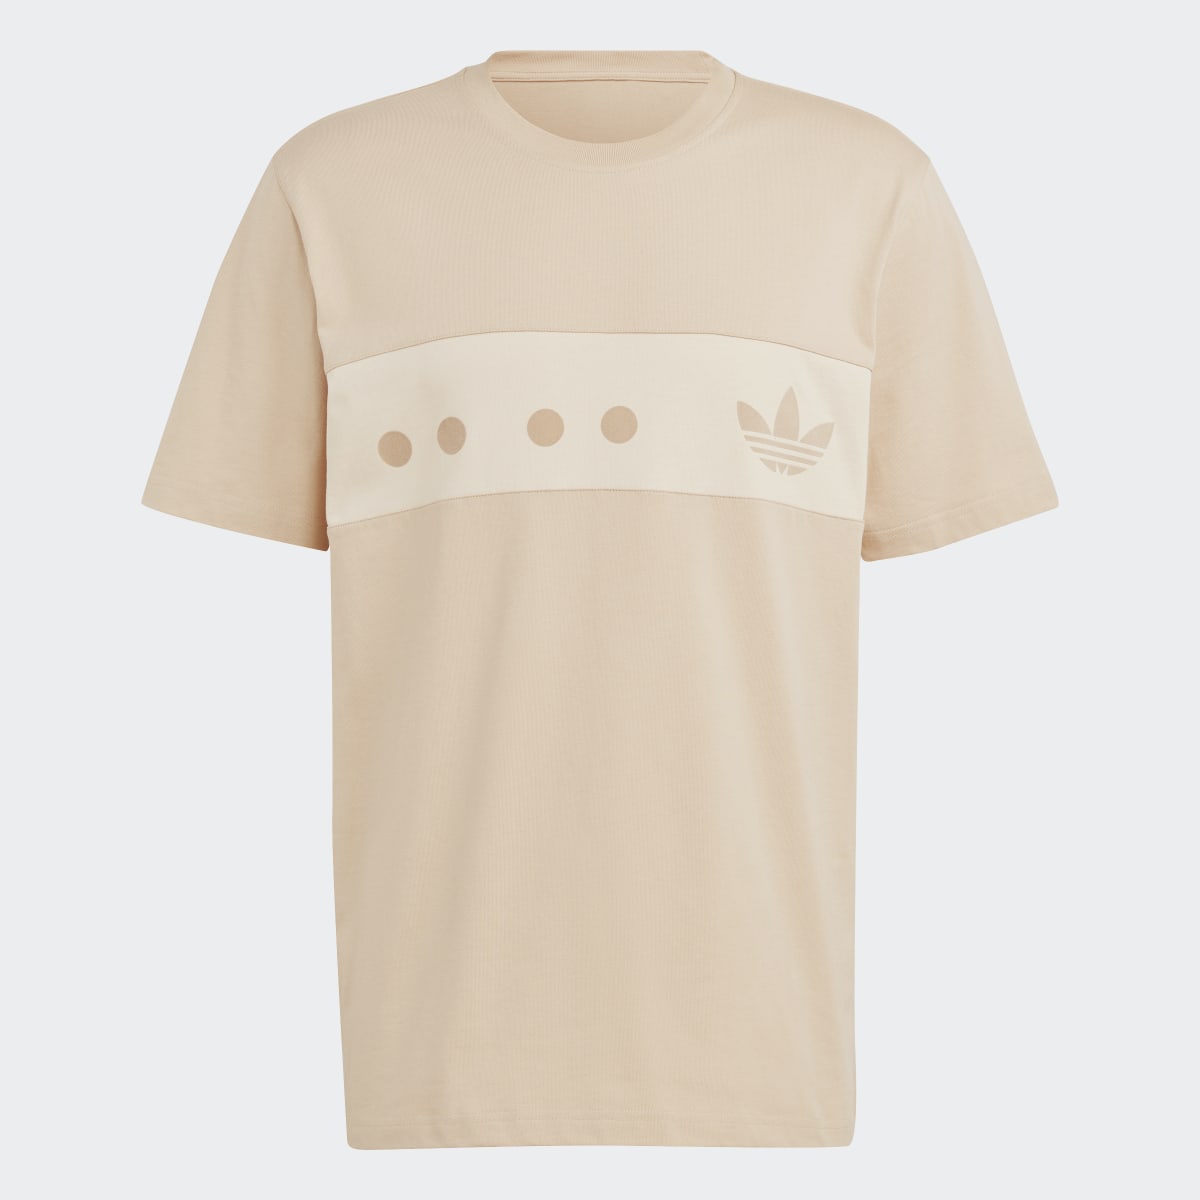 Adidas T-shirt City Boy RIFTA. 6